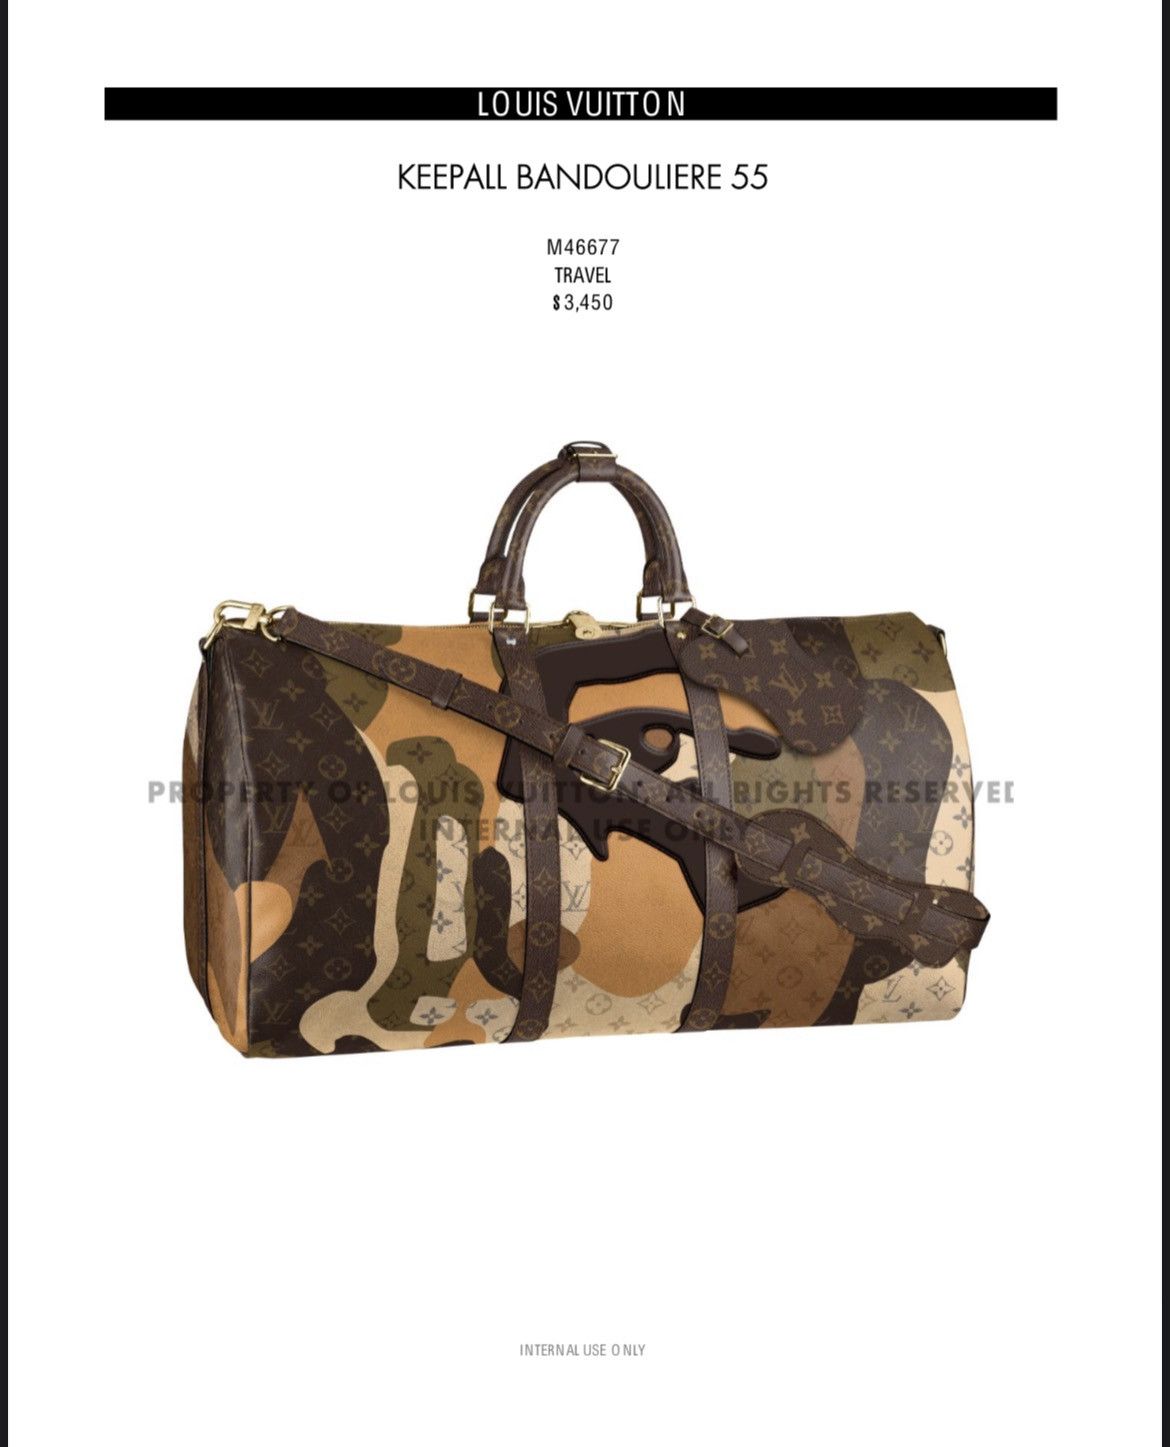 YOMZANSI Style on X: Pharrell Williams Louis Vuitton duffel bag worth  💰$1,000,000. Made with crocodile skin, gold and a diamond lock. 📹:  enfntsterribles (tiktok)